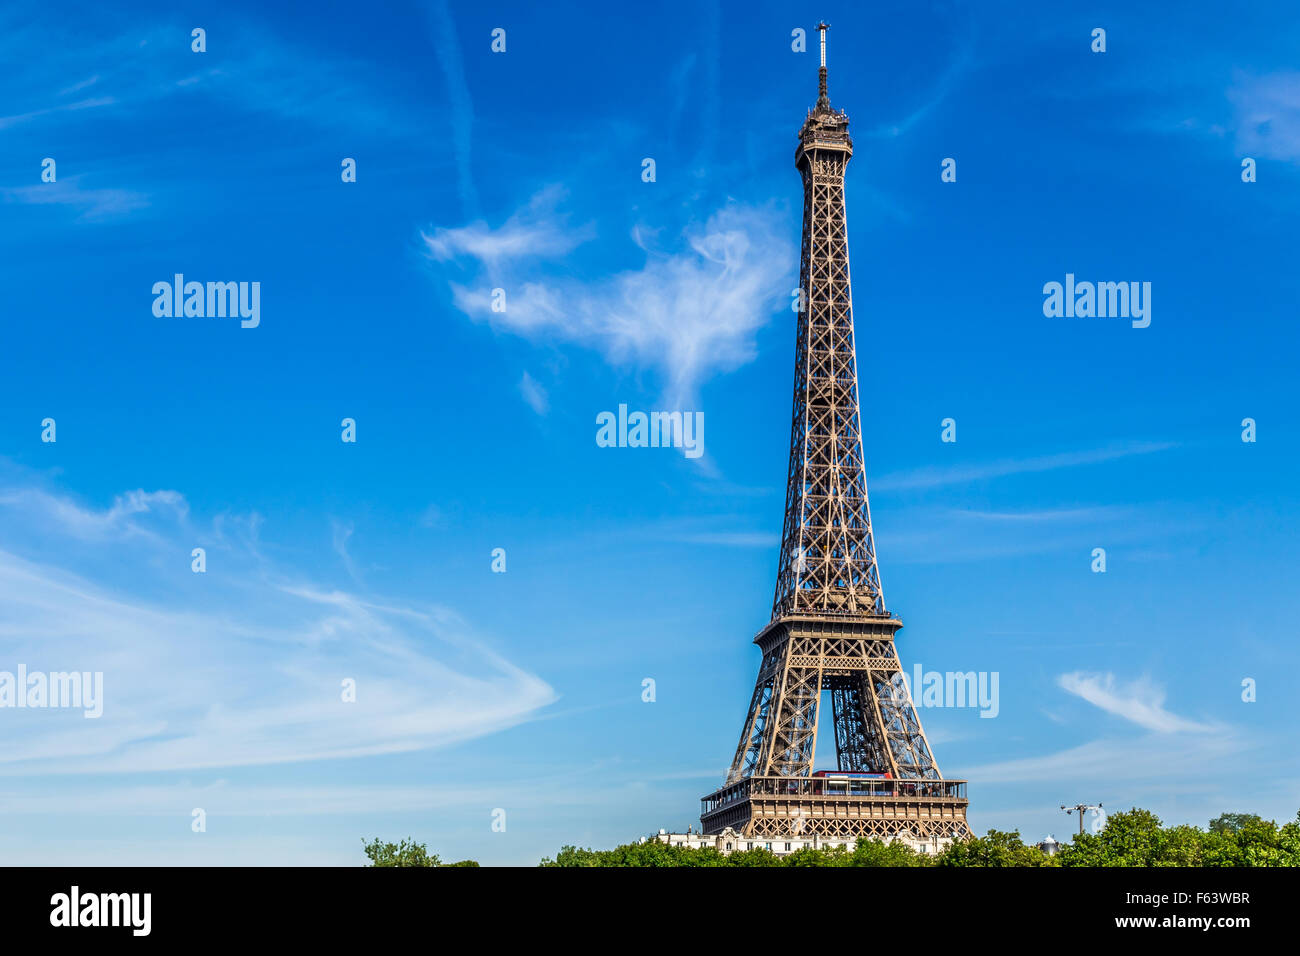 Torre Eiffel contro un cielo blu con nuvole wispy. Foto Stock